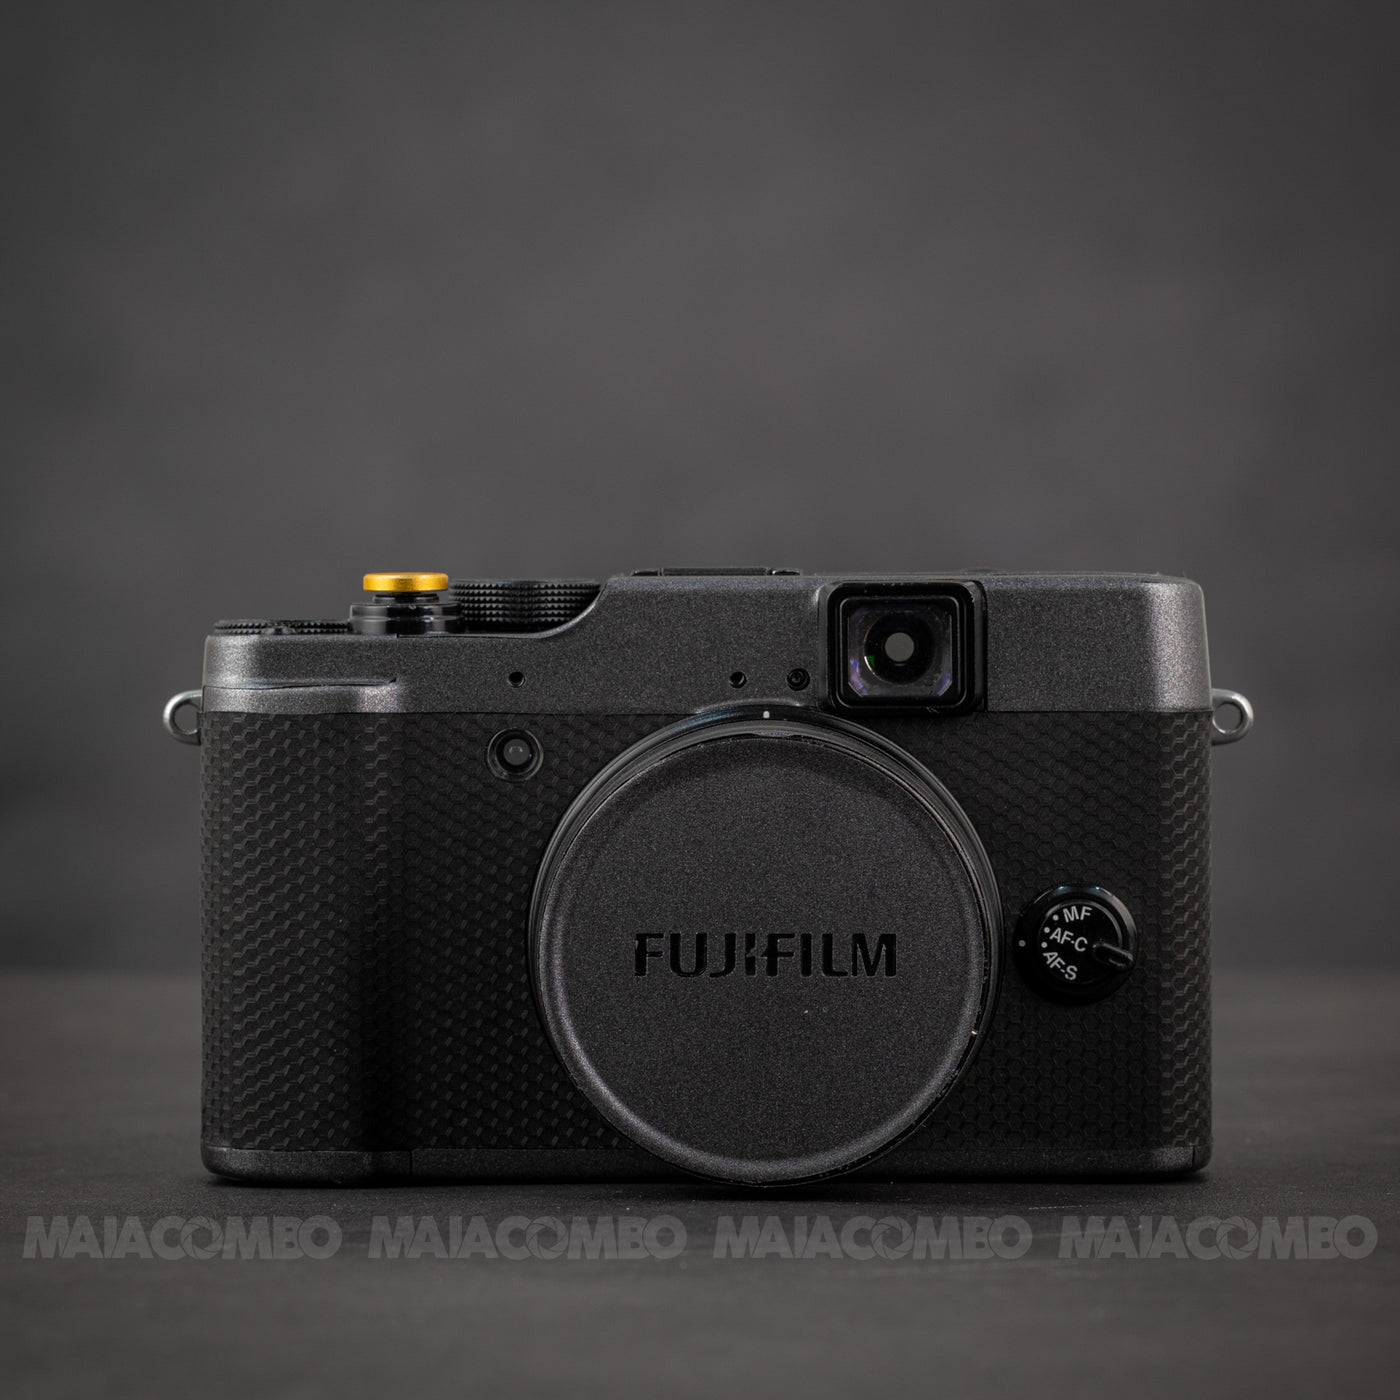 FUJIFILM X10 Camera Skin/Wrap